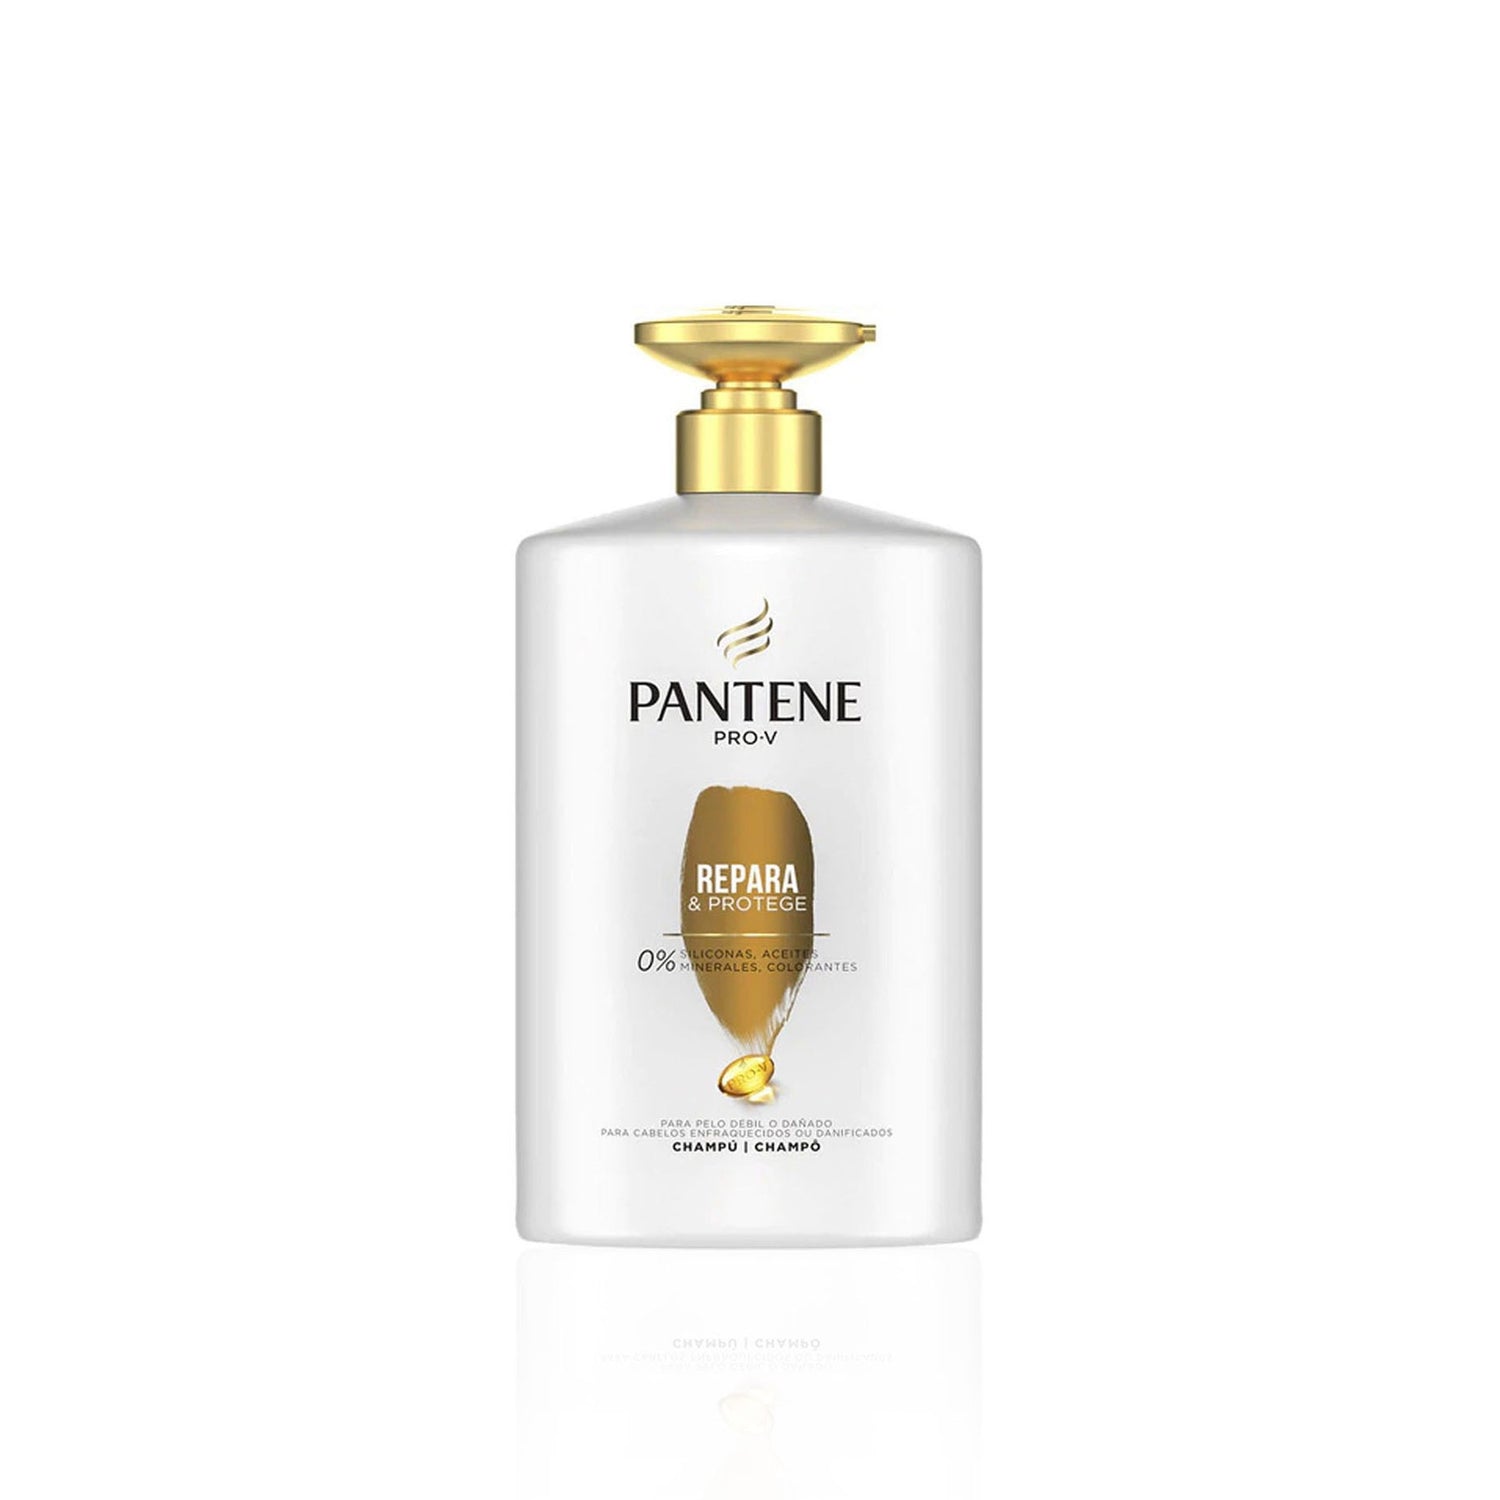 Pantene Shampoo Repair And Protects 1000 Ml